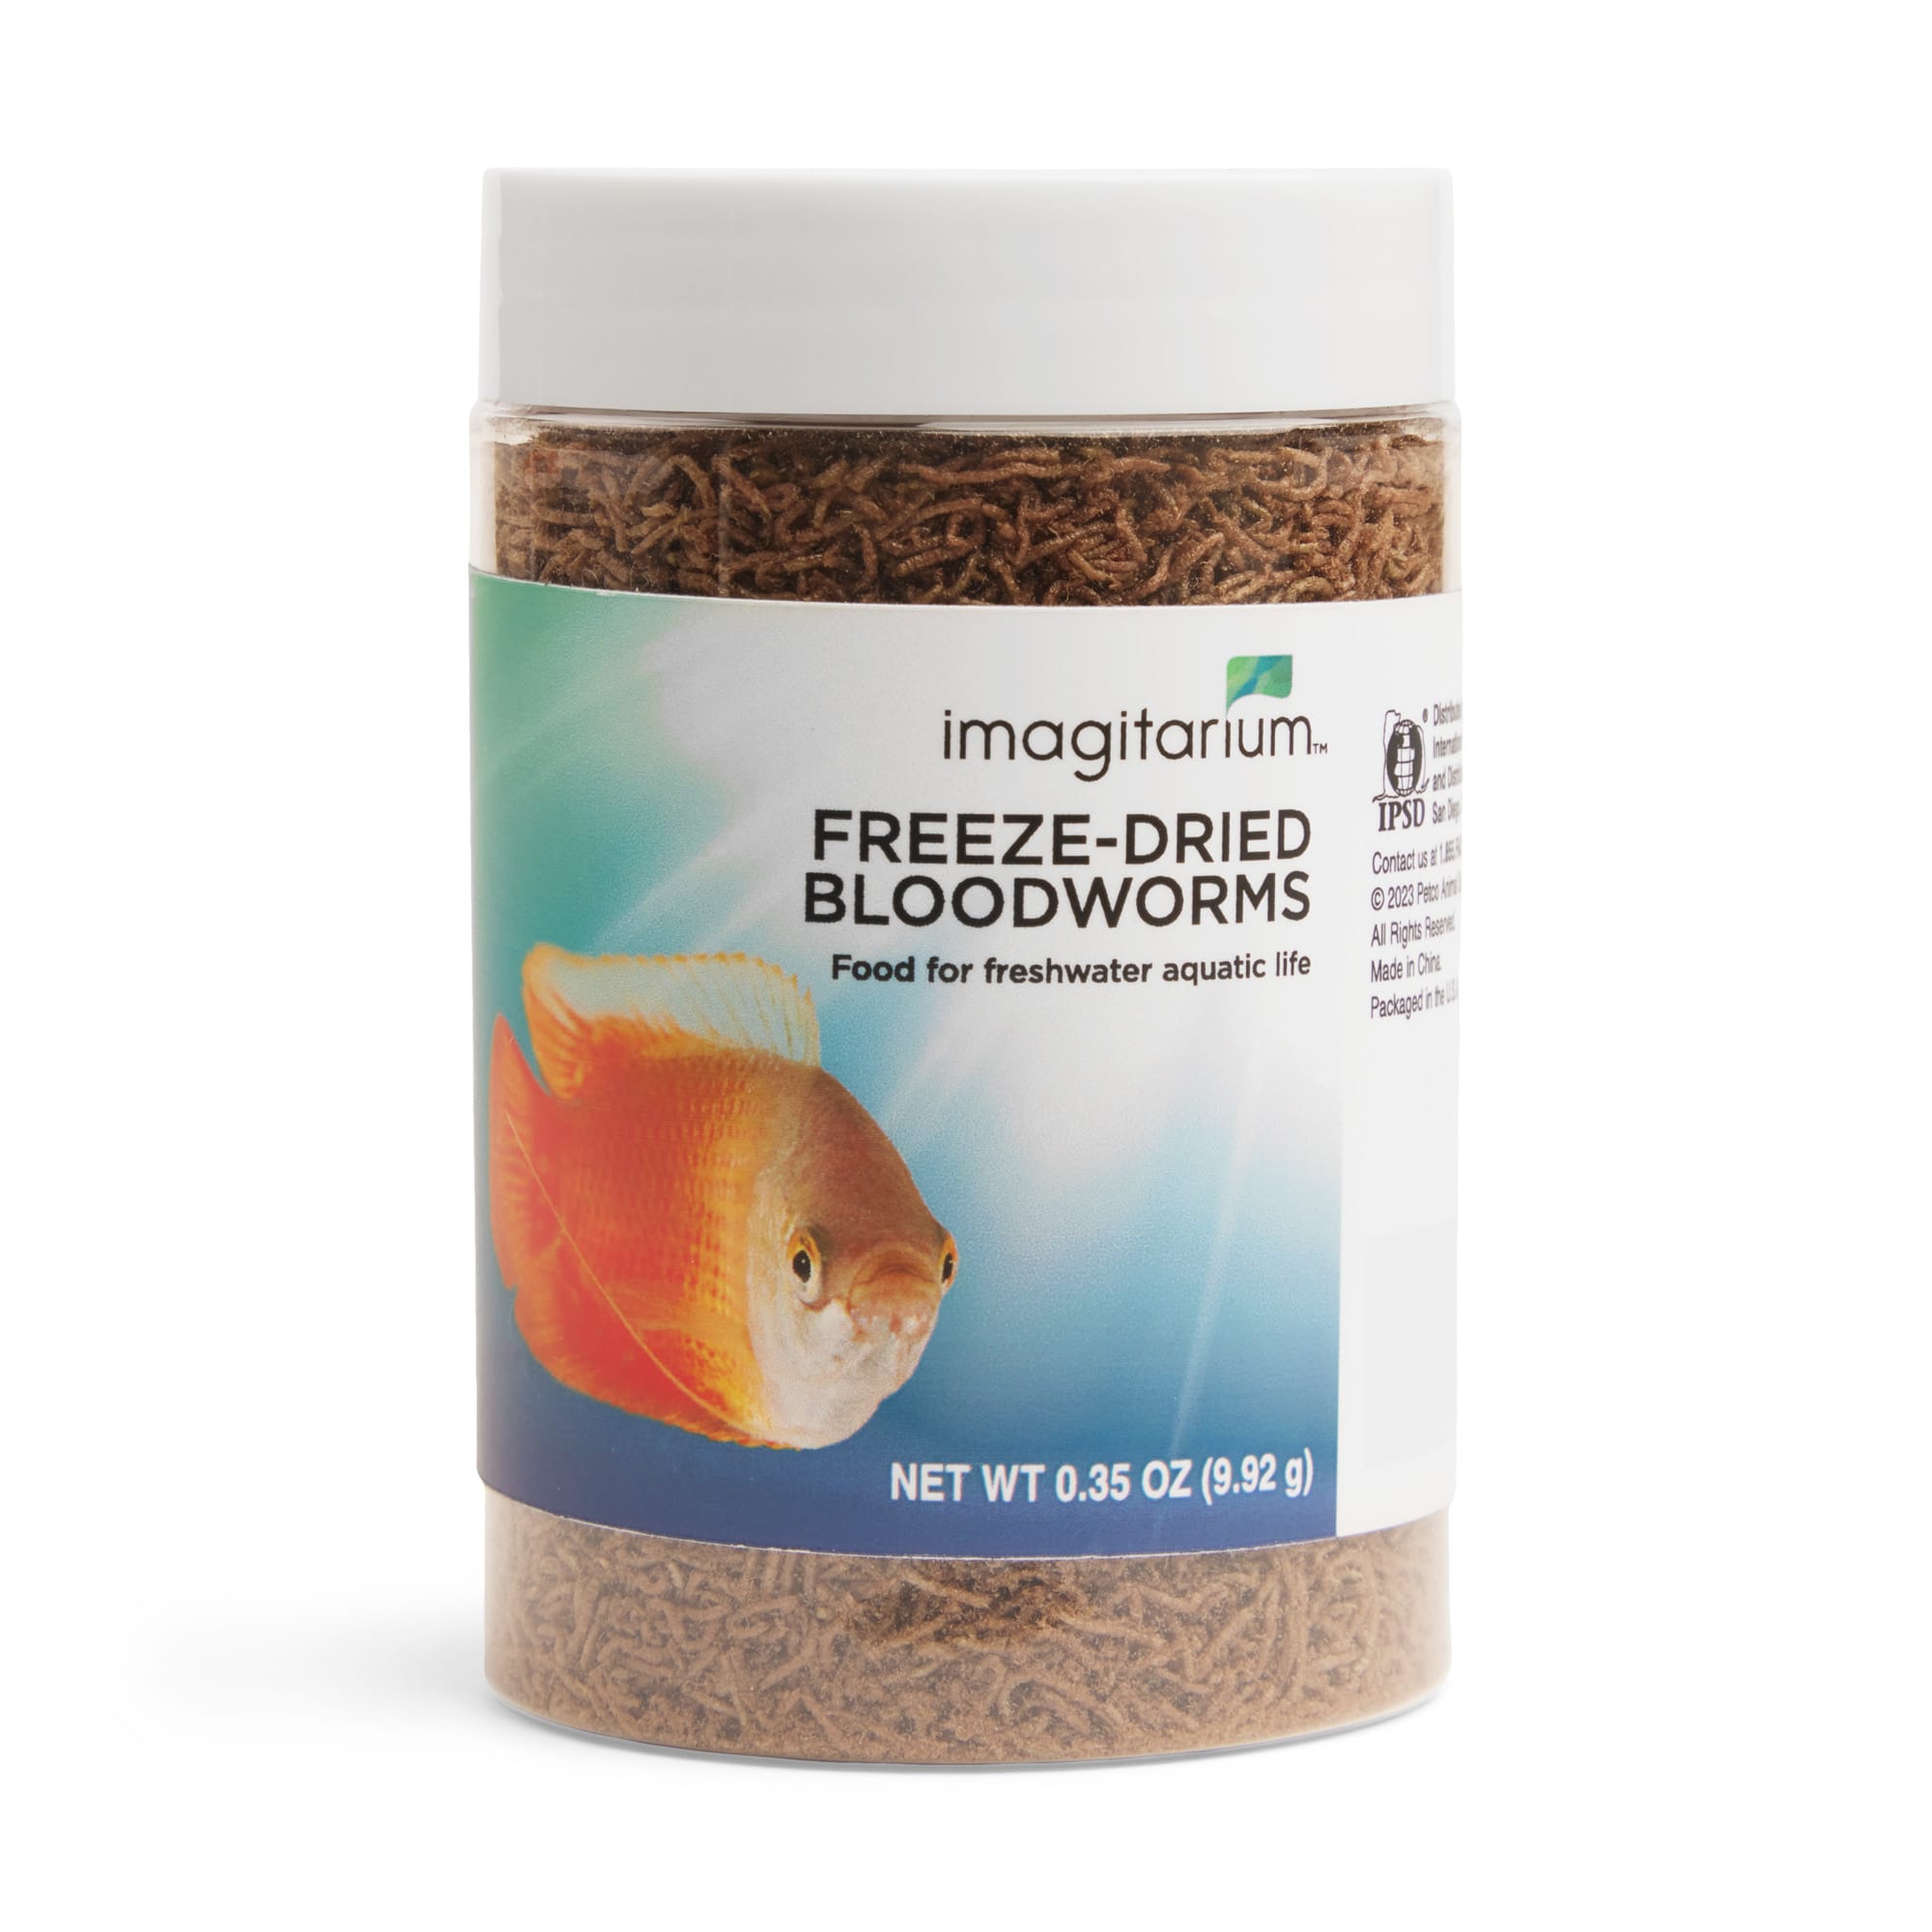 Imagitarium Freeze-Dried Bloodworms for Freshwater Aquatic Life, 0.35 oz.